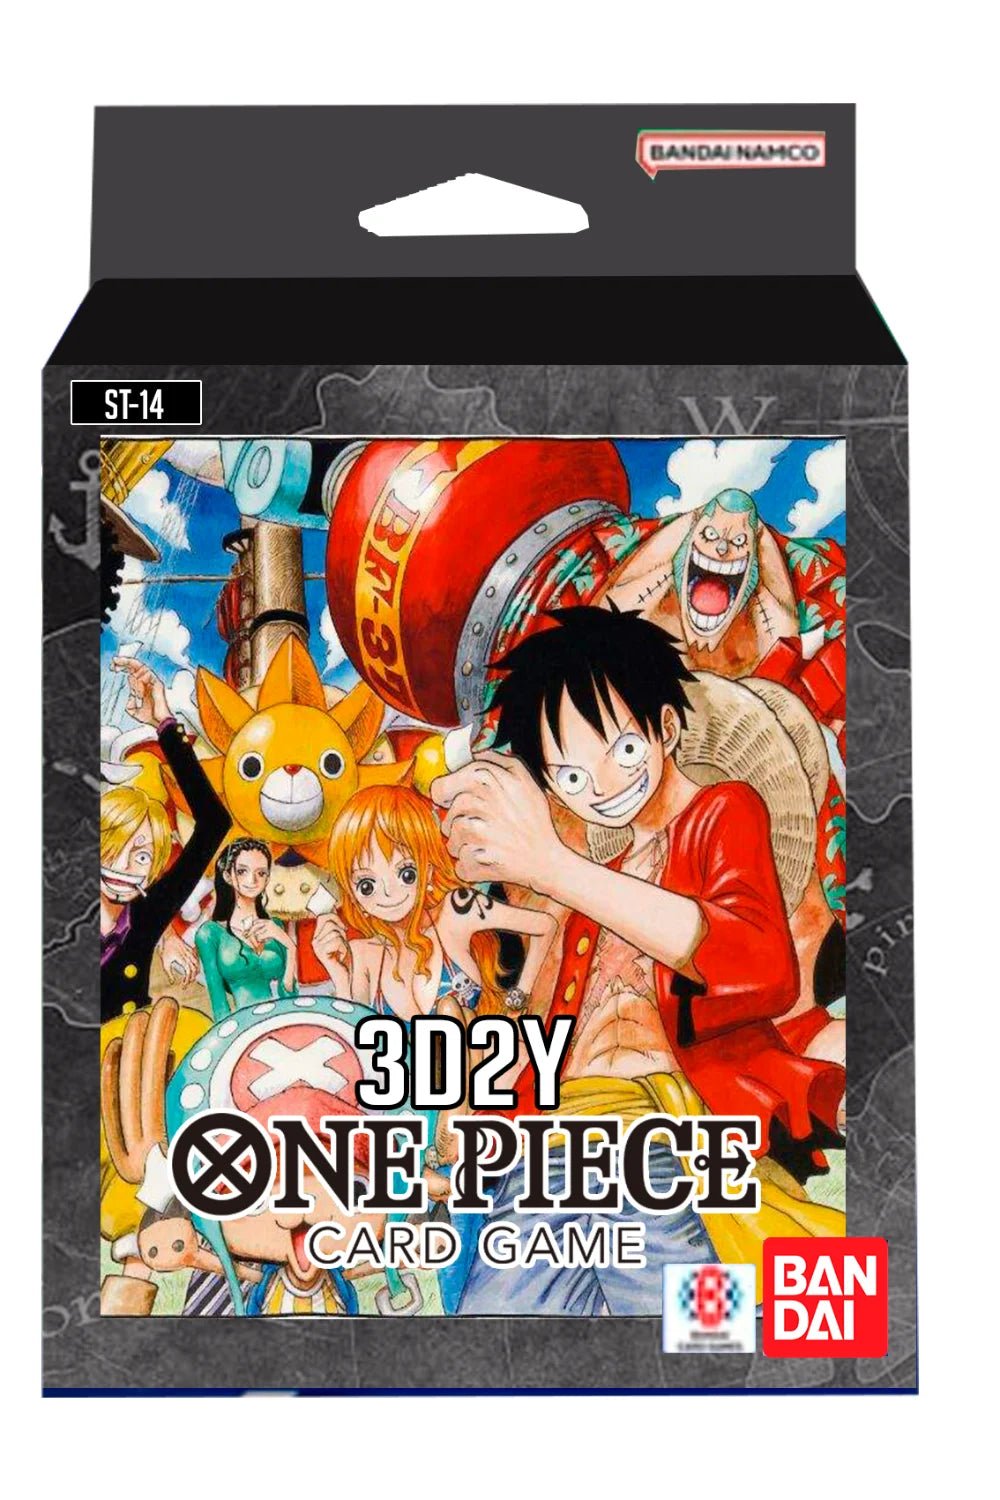 One Piece TCG: 3D2Y Starter Deck (ST-14)